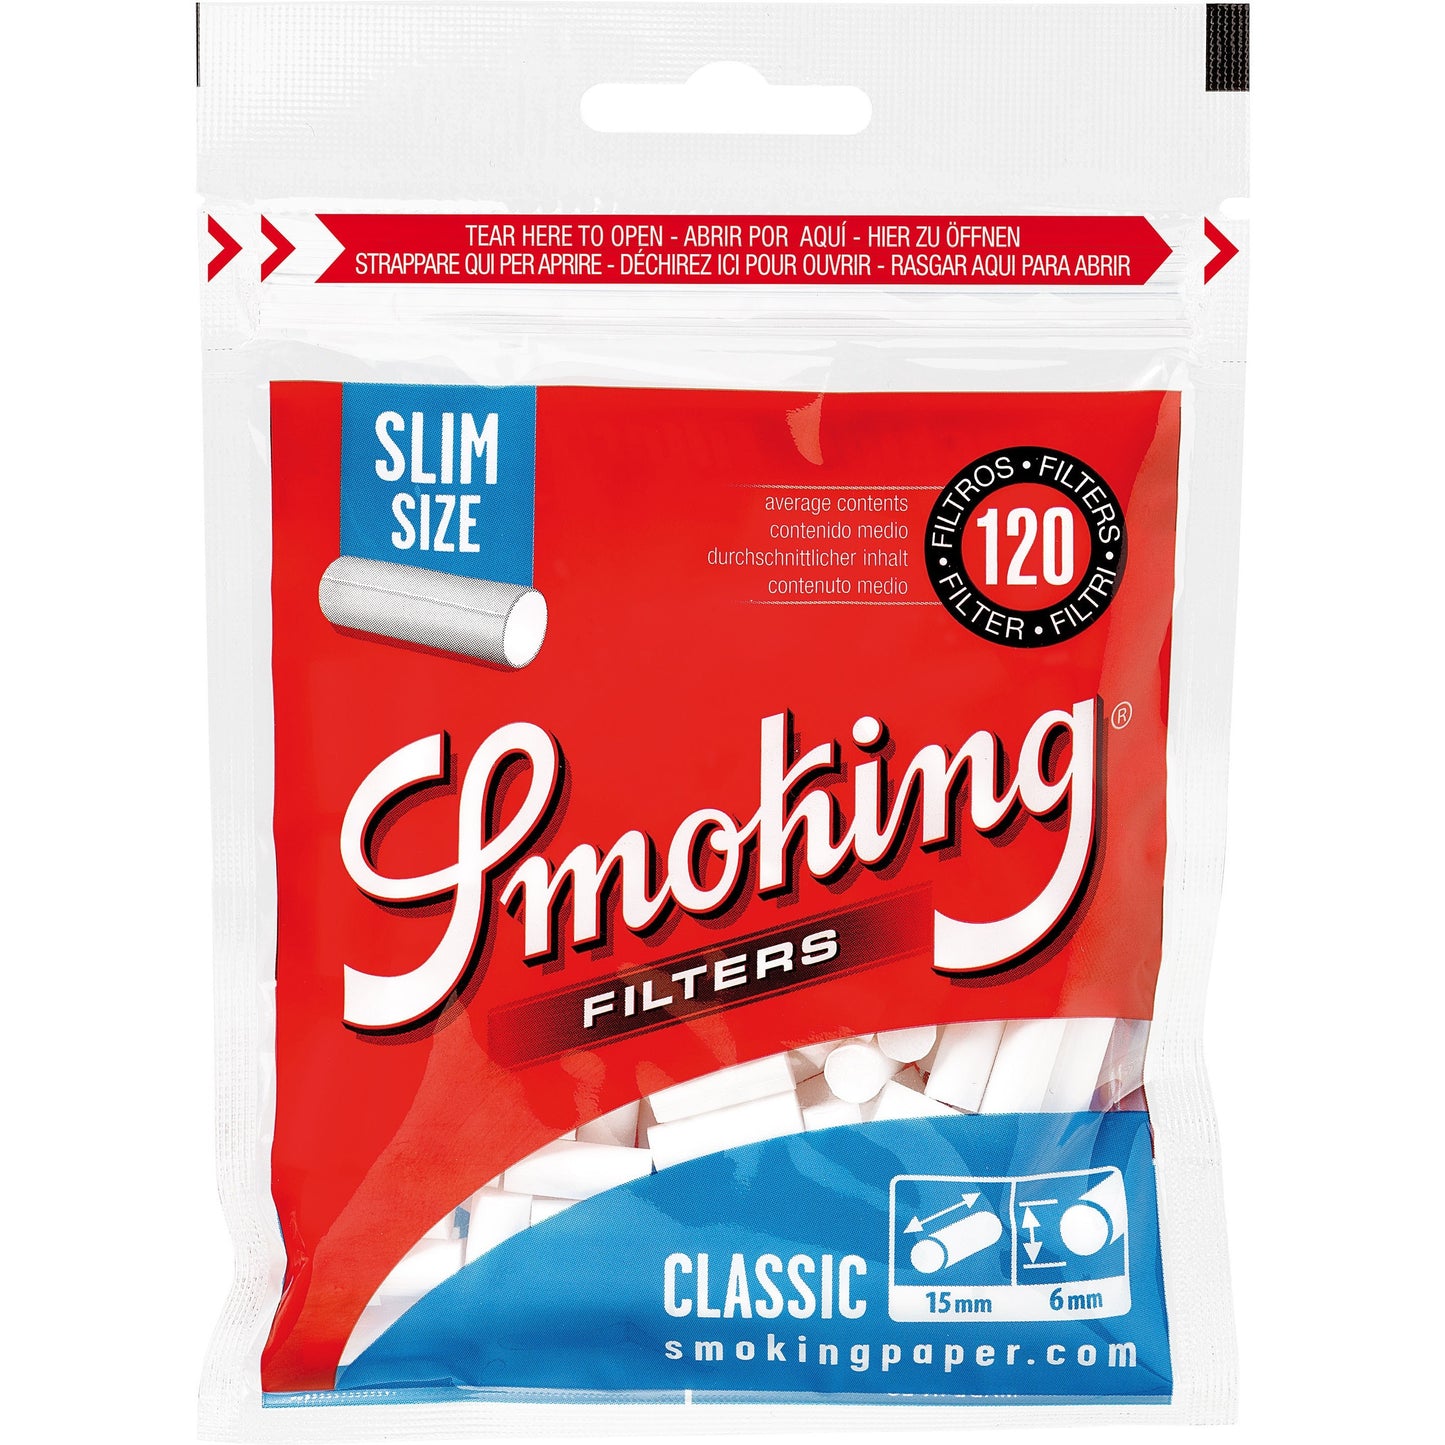 Smoking Classic Slim Size Filters Bag